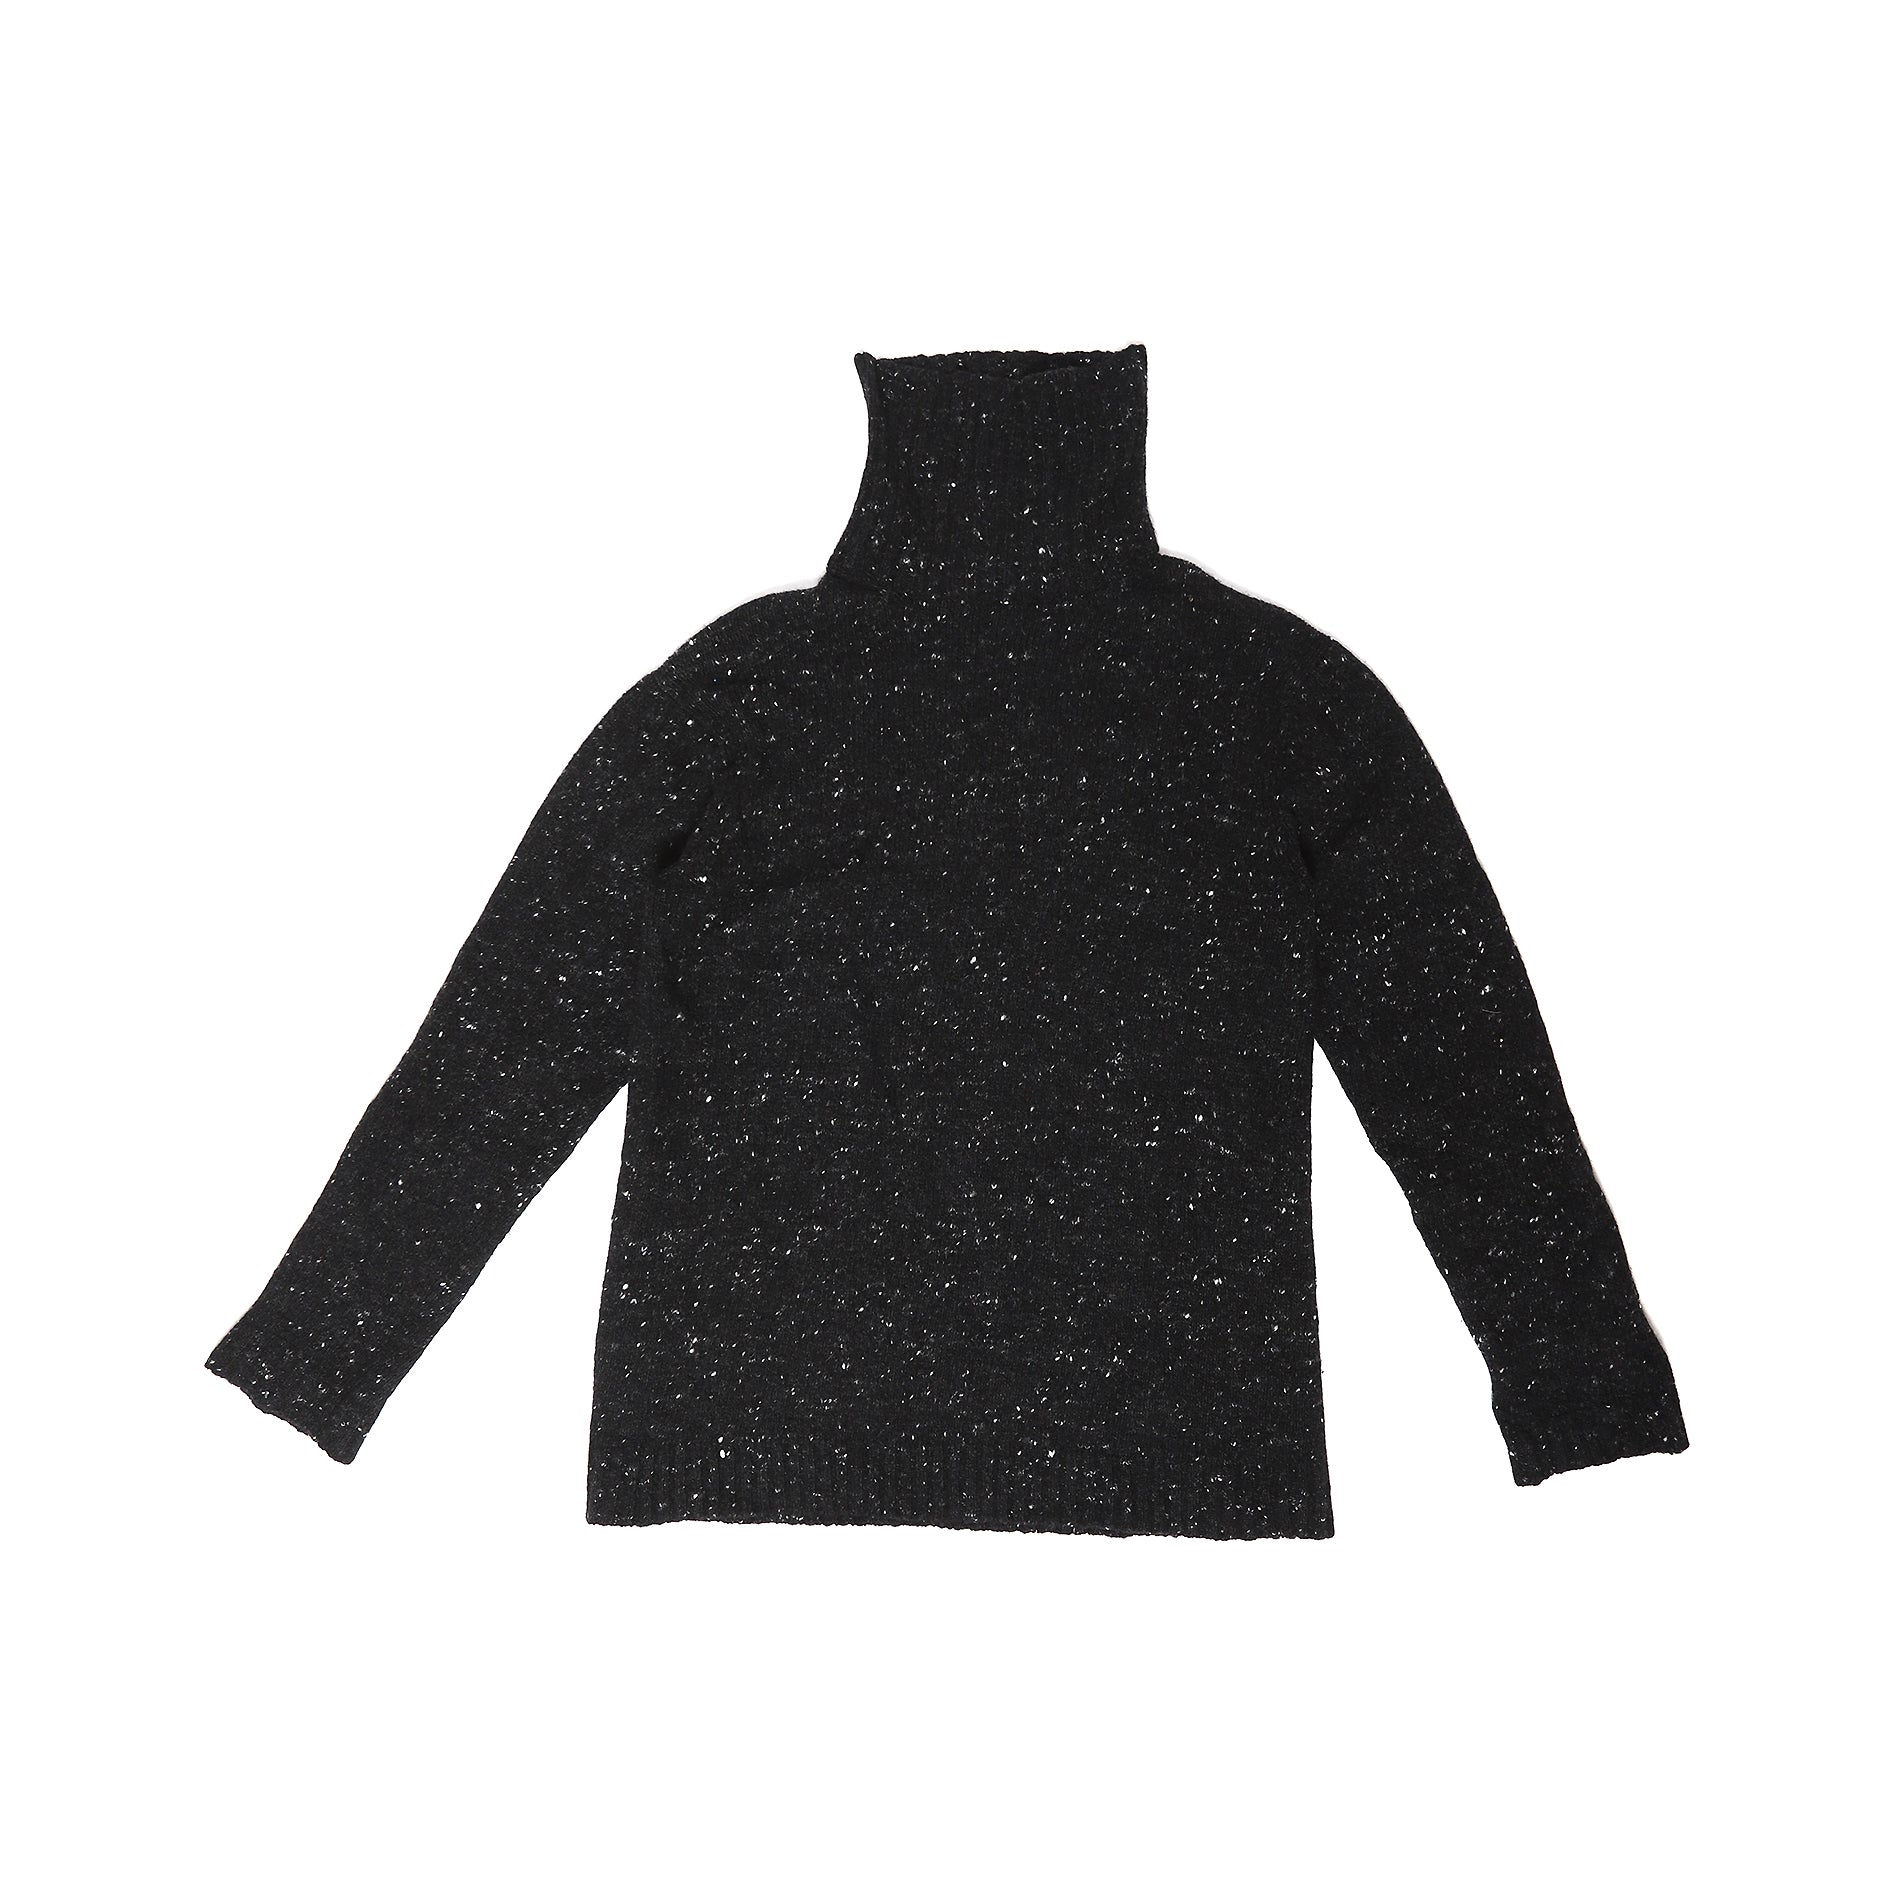 Yohji Yamamoto Pour Homme Black Melange Turtleneck Knit Sweater